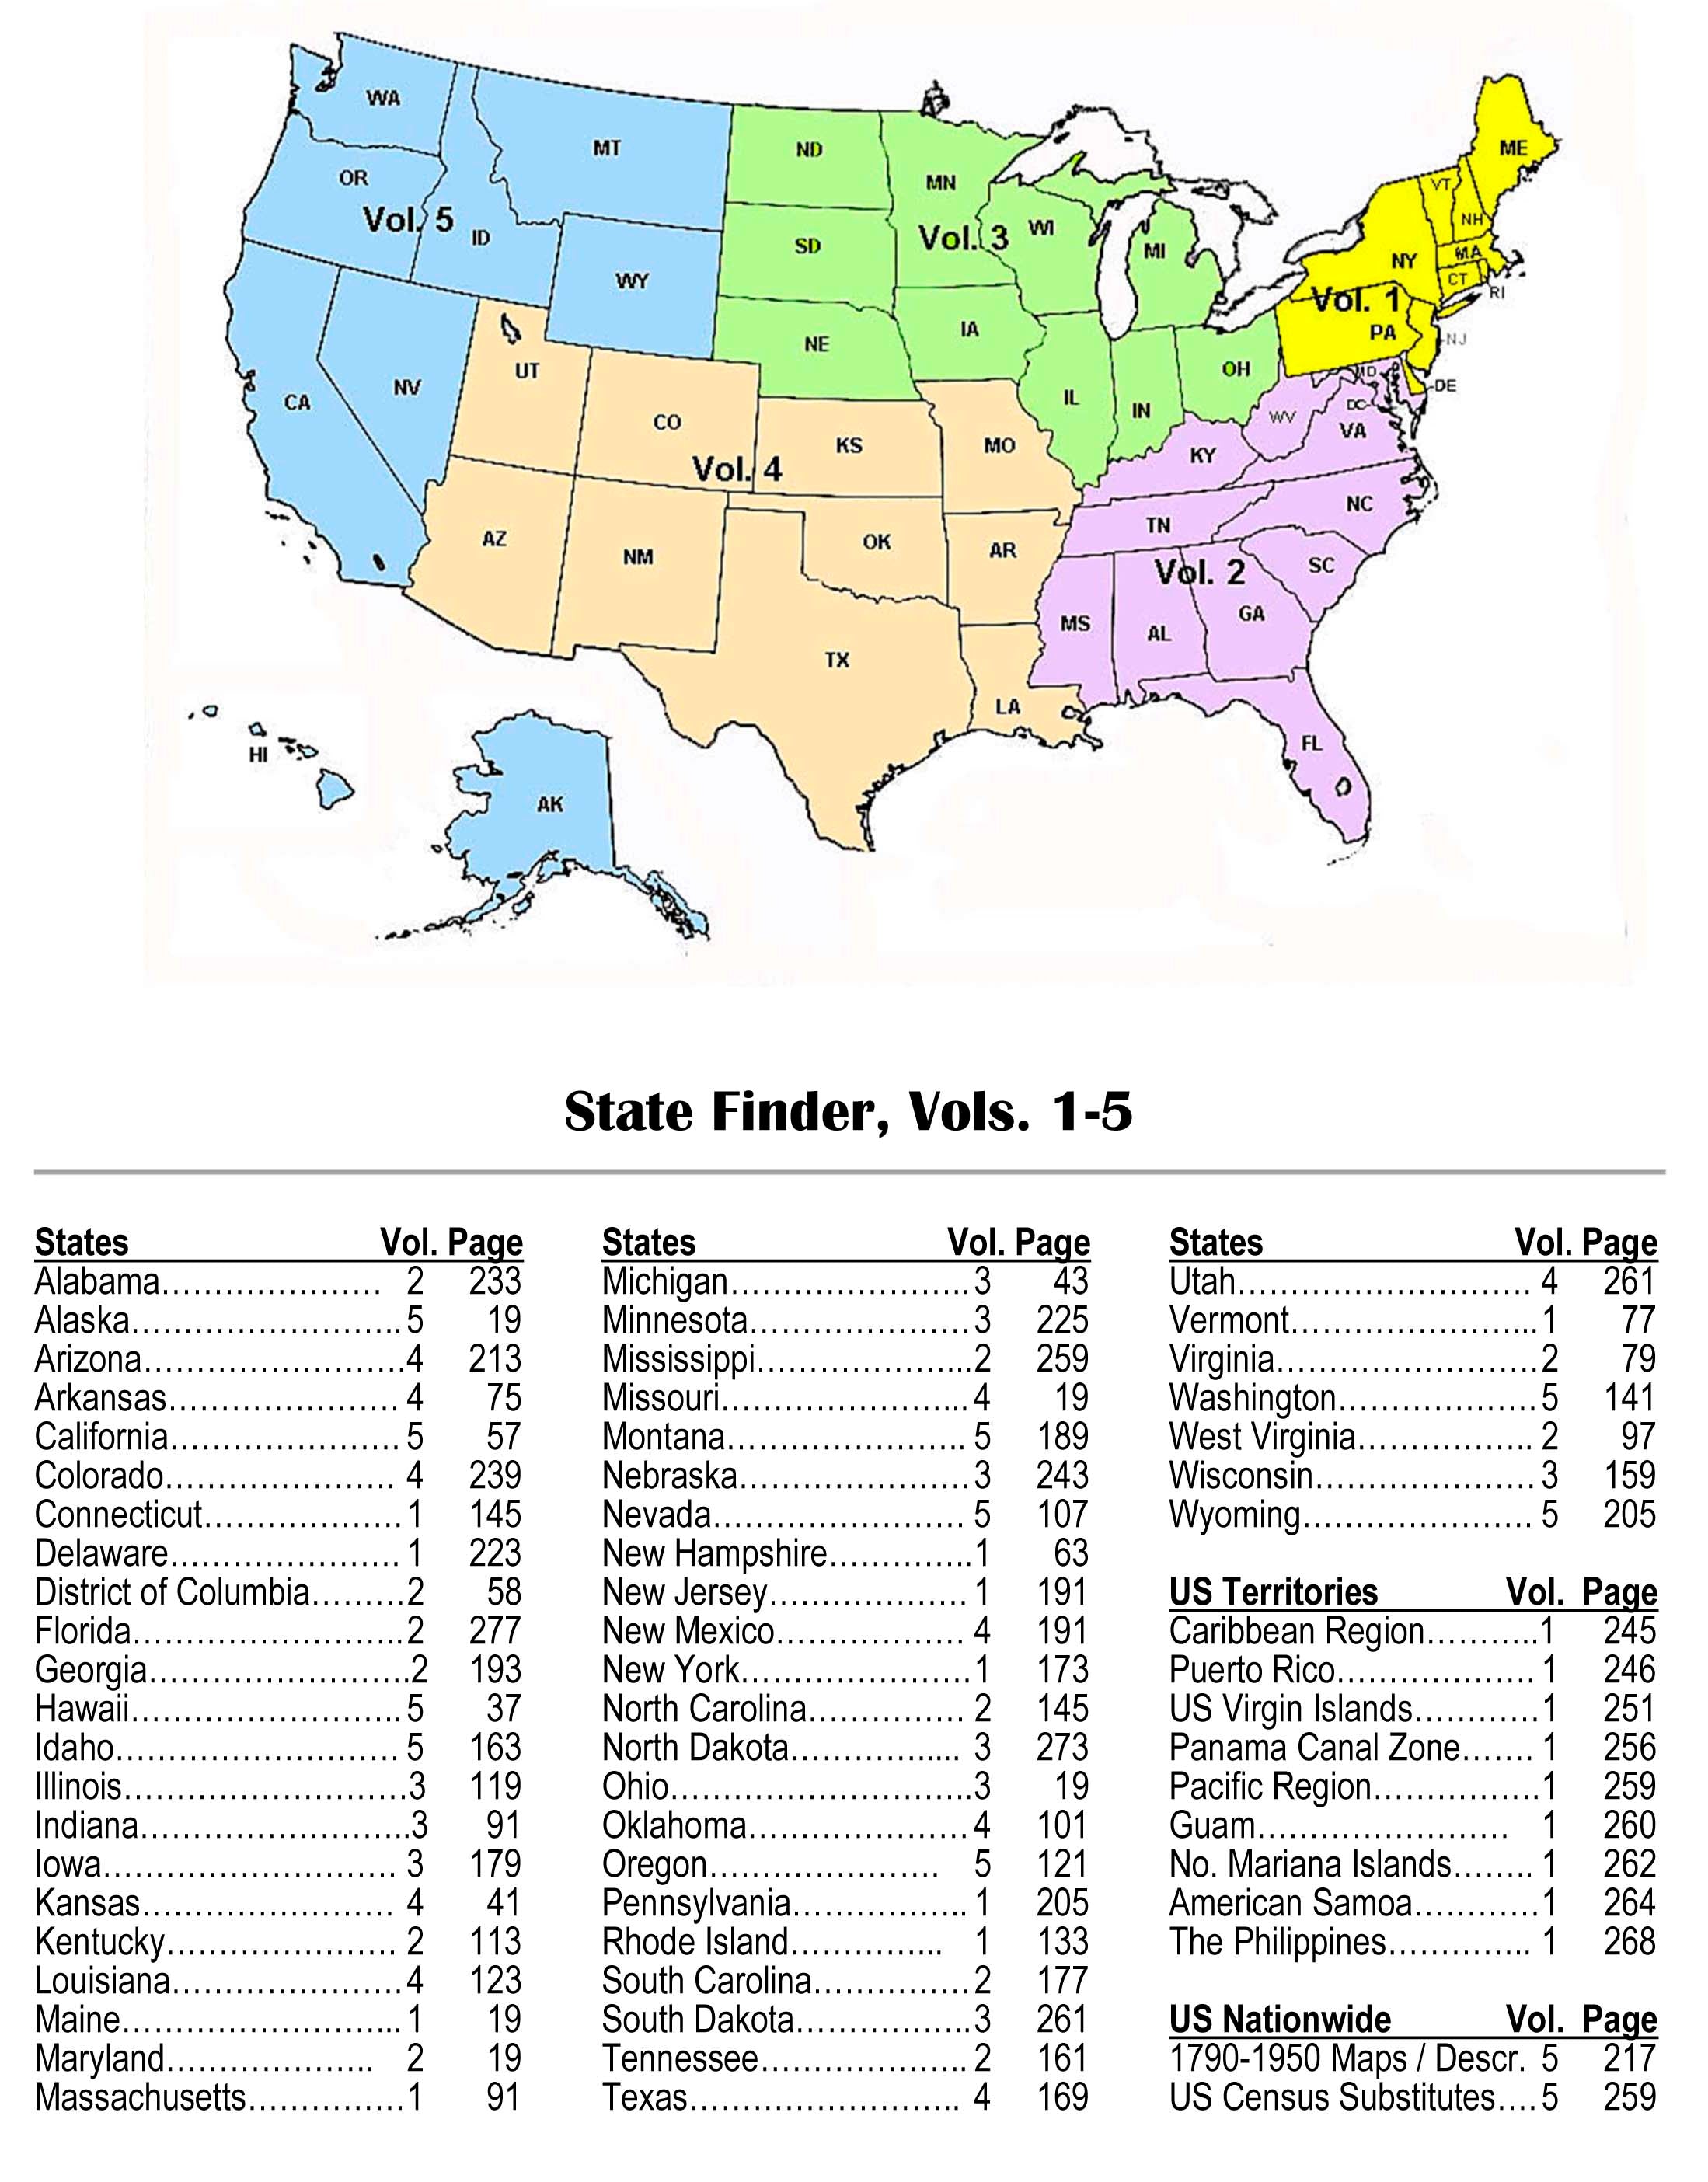 Census Substitutes & State Census Records, 3rd Edition, Vol. 1 - Northeastern States & U.S. Territories (BUNDLE: Printed Book & PDF eBook)